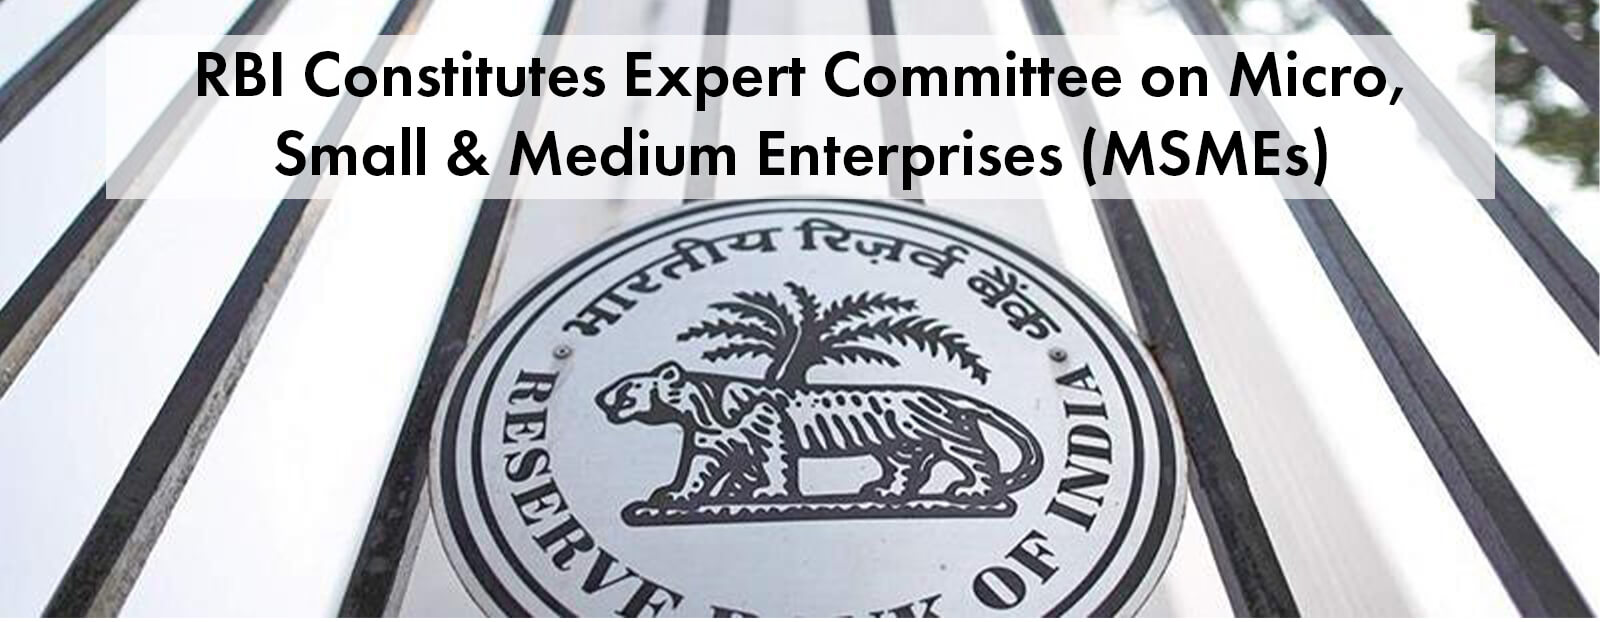 RBI Constitutes Expert Committee on Micro, Small & Medium Enterprises (MSMEs)